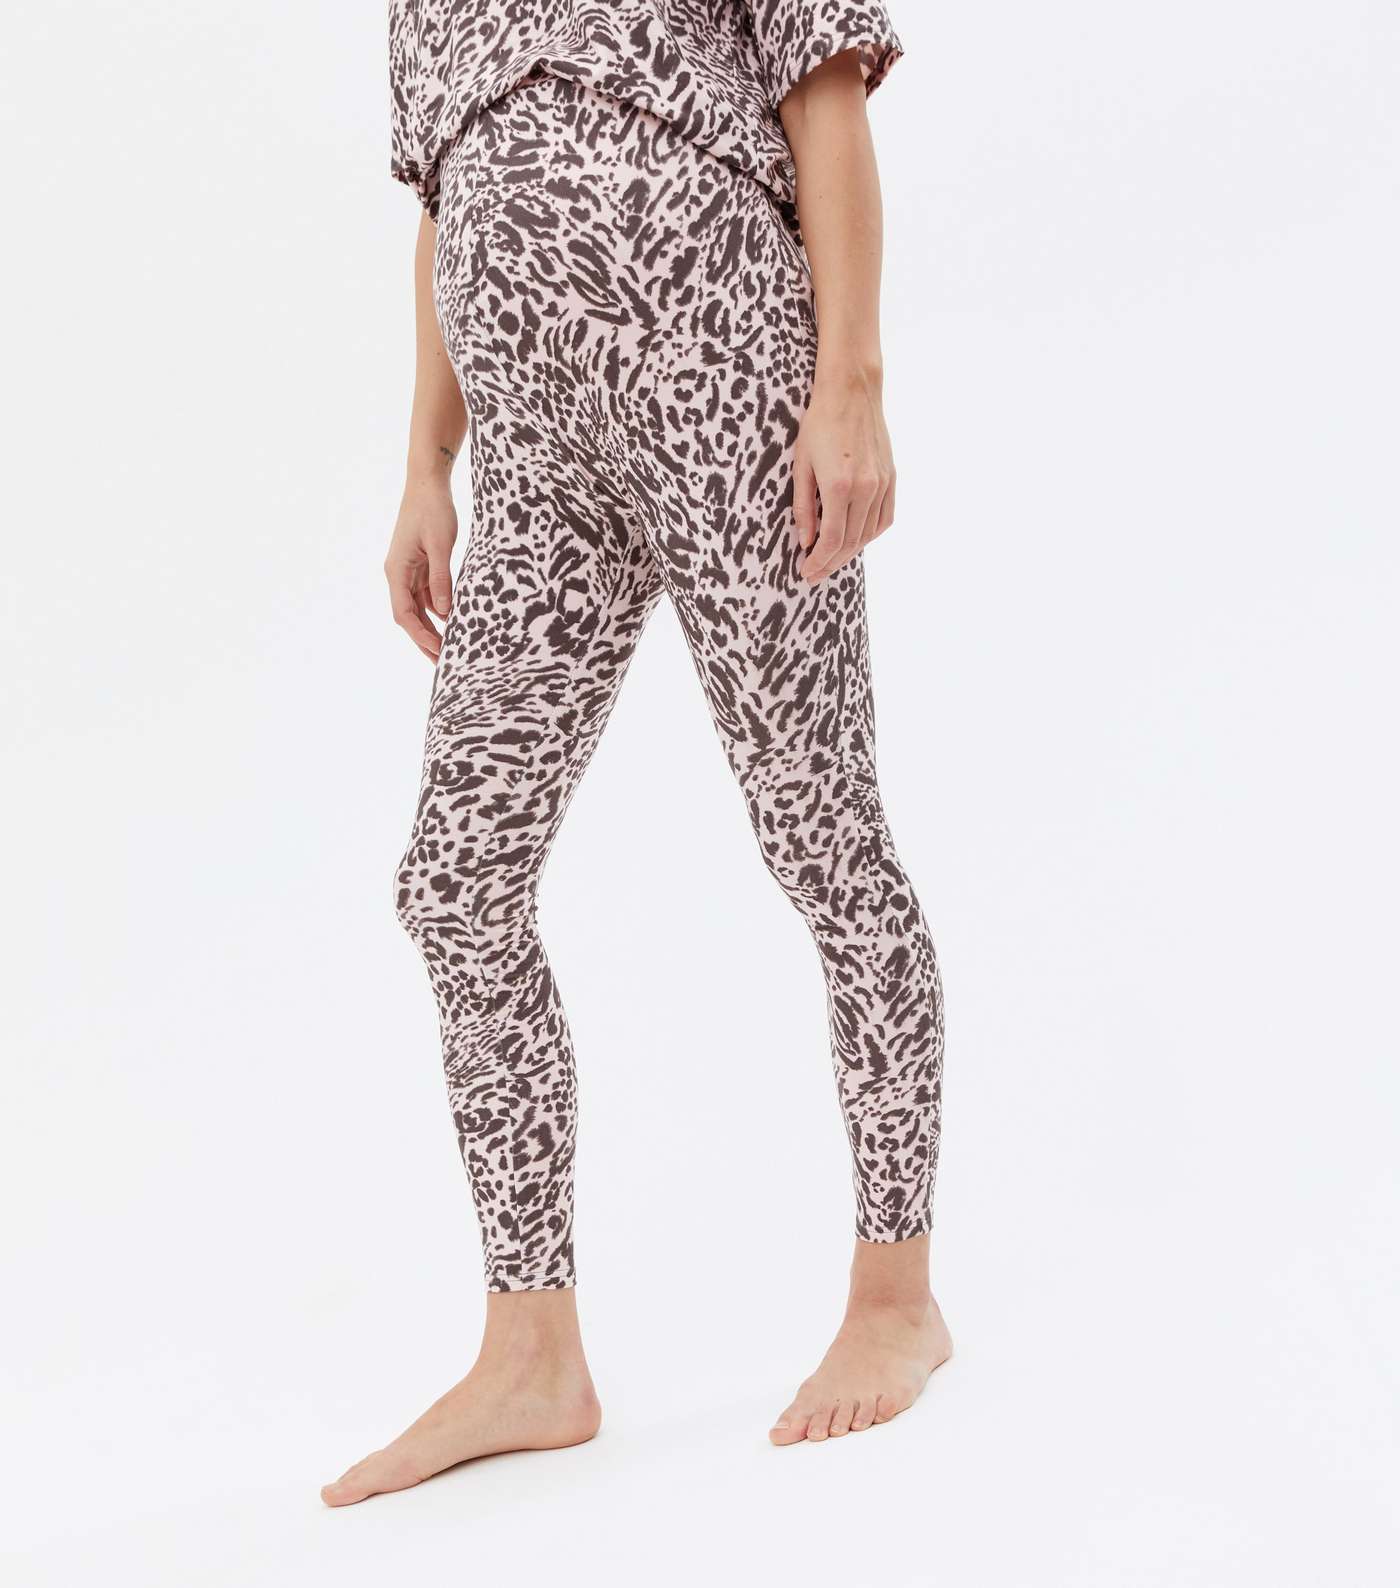 Maternity Pink Soft Touch Legging Pyjama Set with Animal Print Image 3